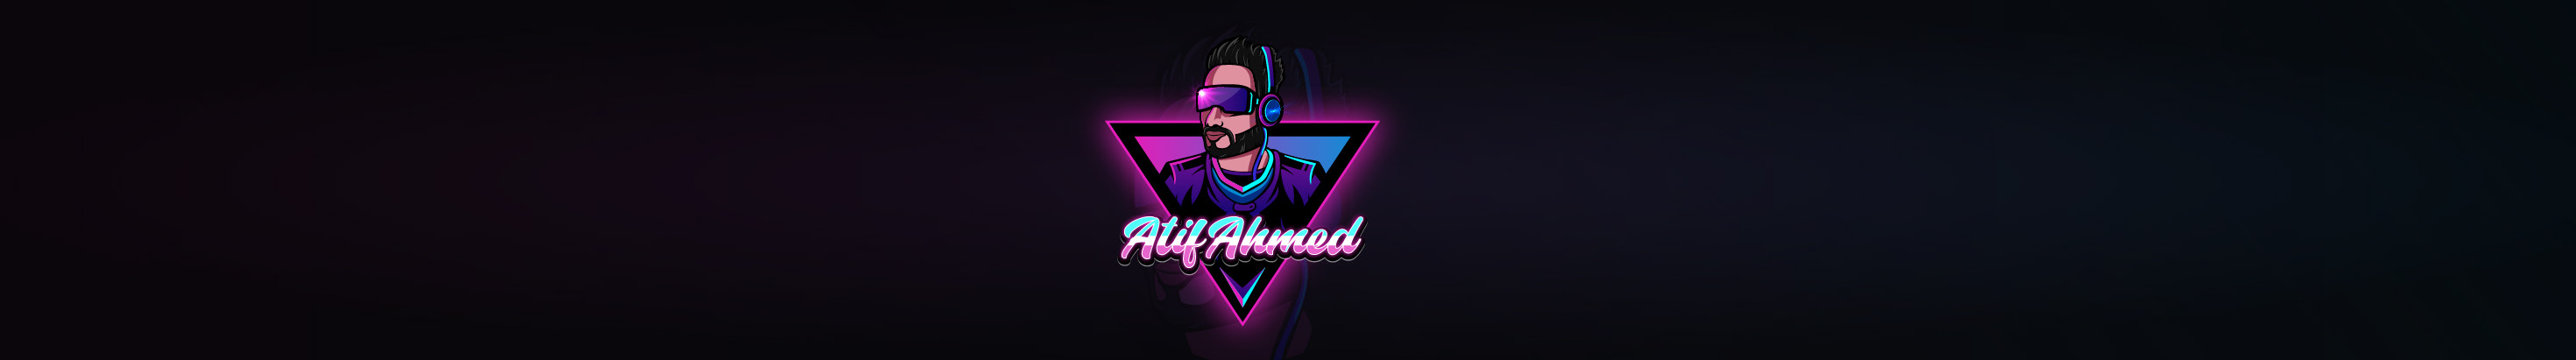 Atif Ahmed's profile banner